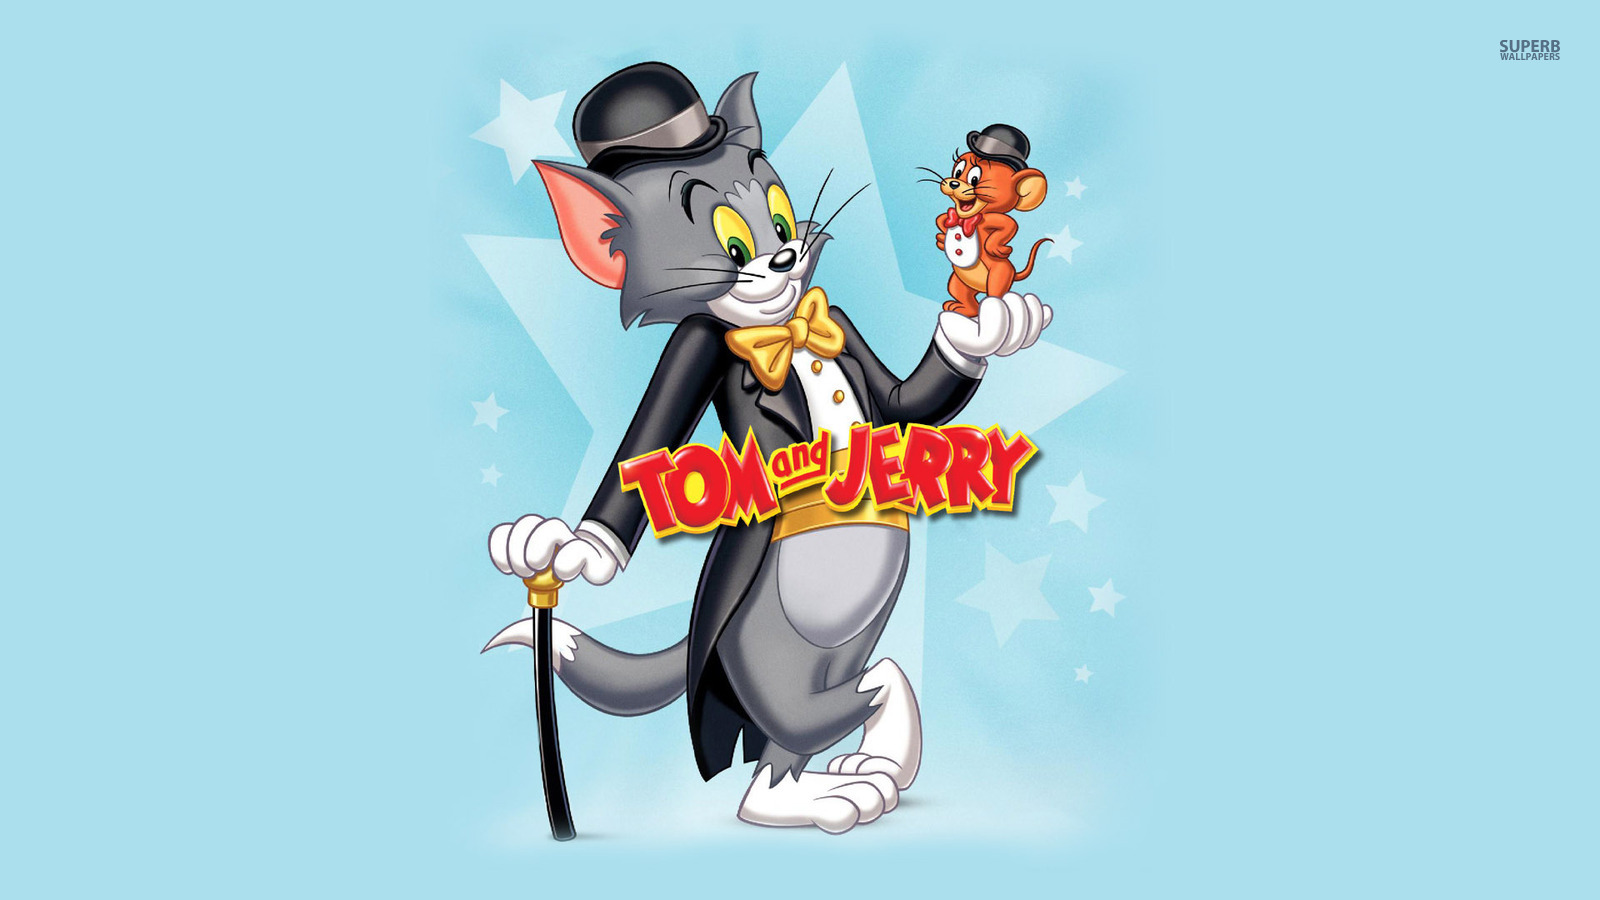 Tom and Jerry - Cartoons Wallpaper (38677684) - Fanpop